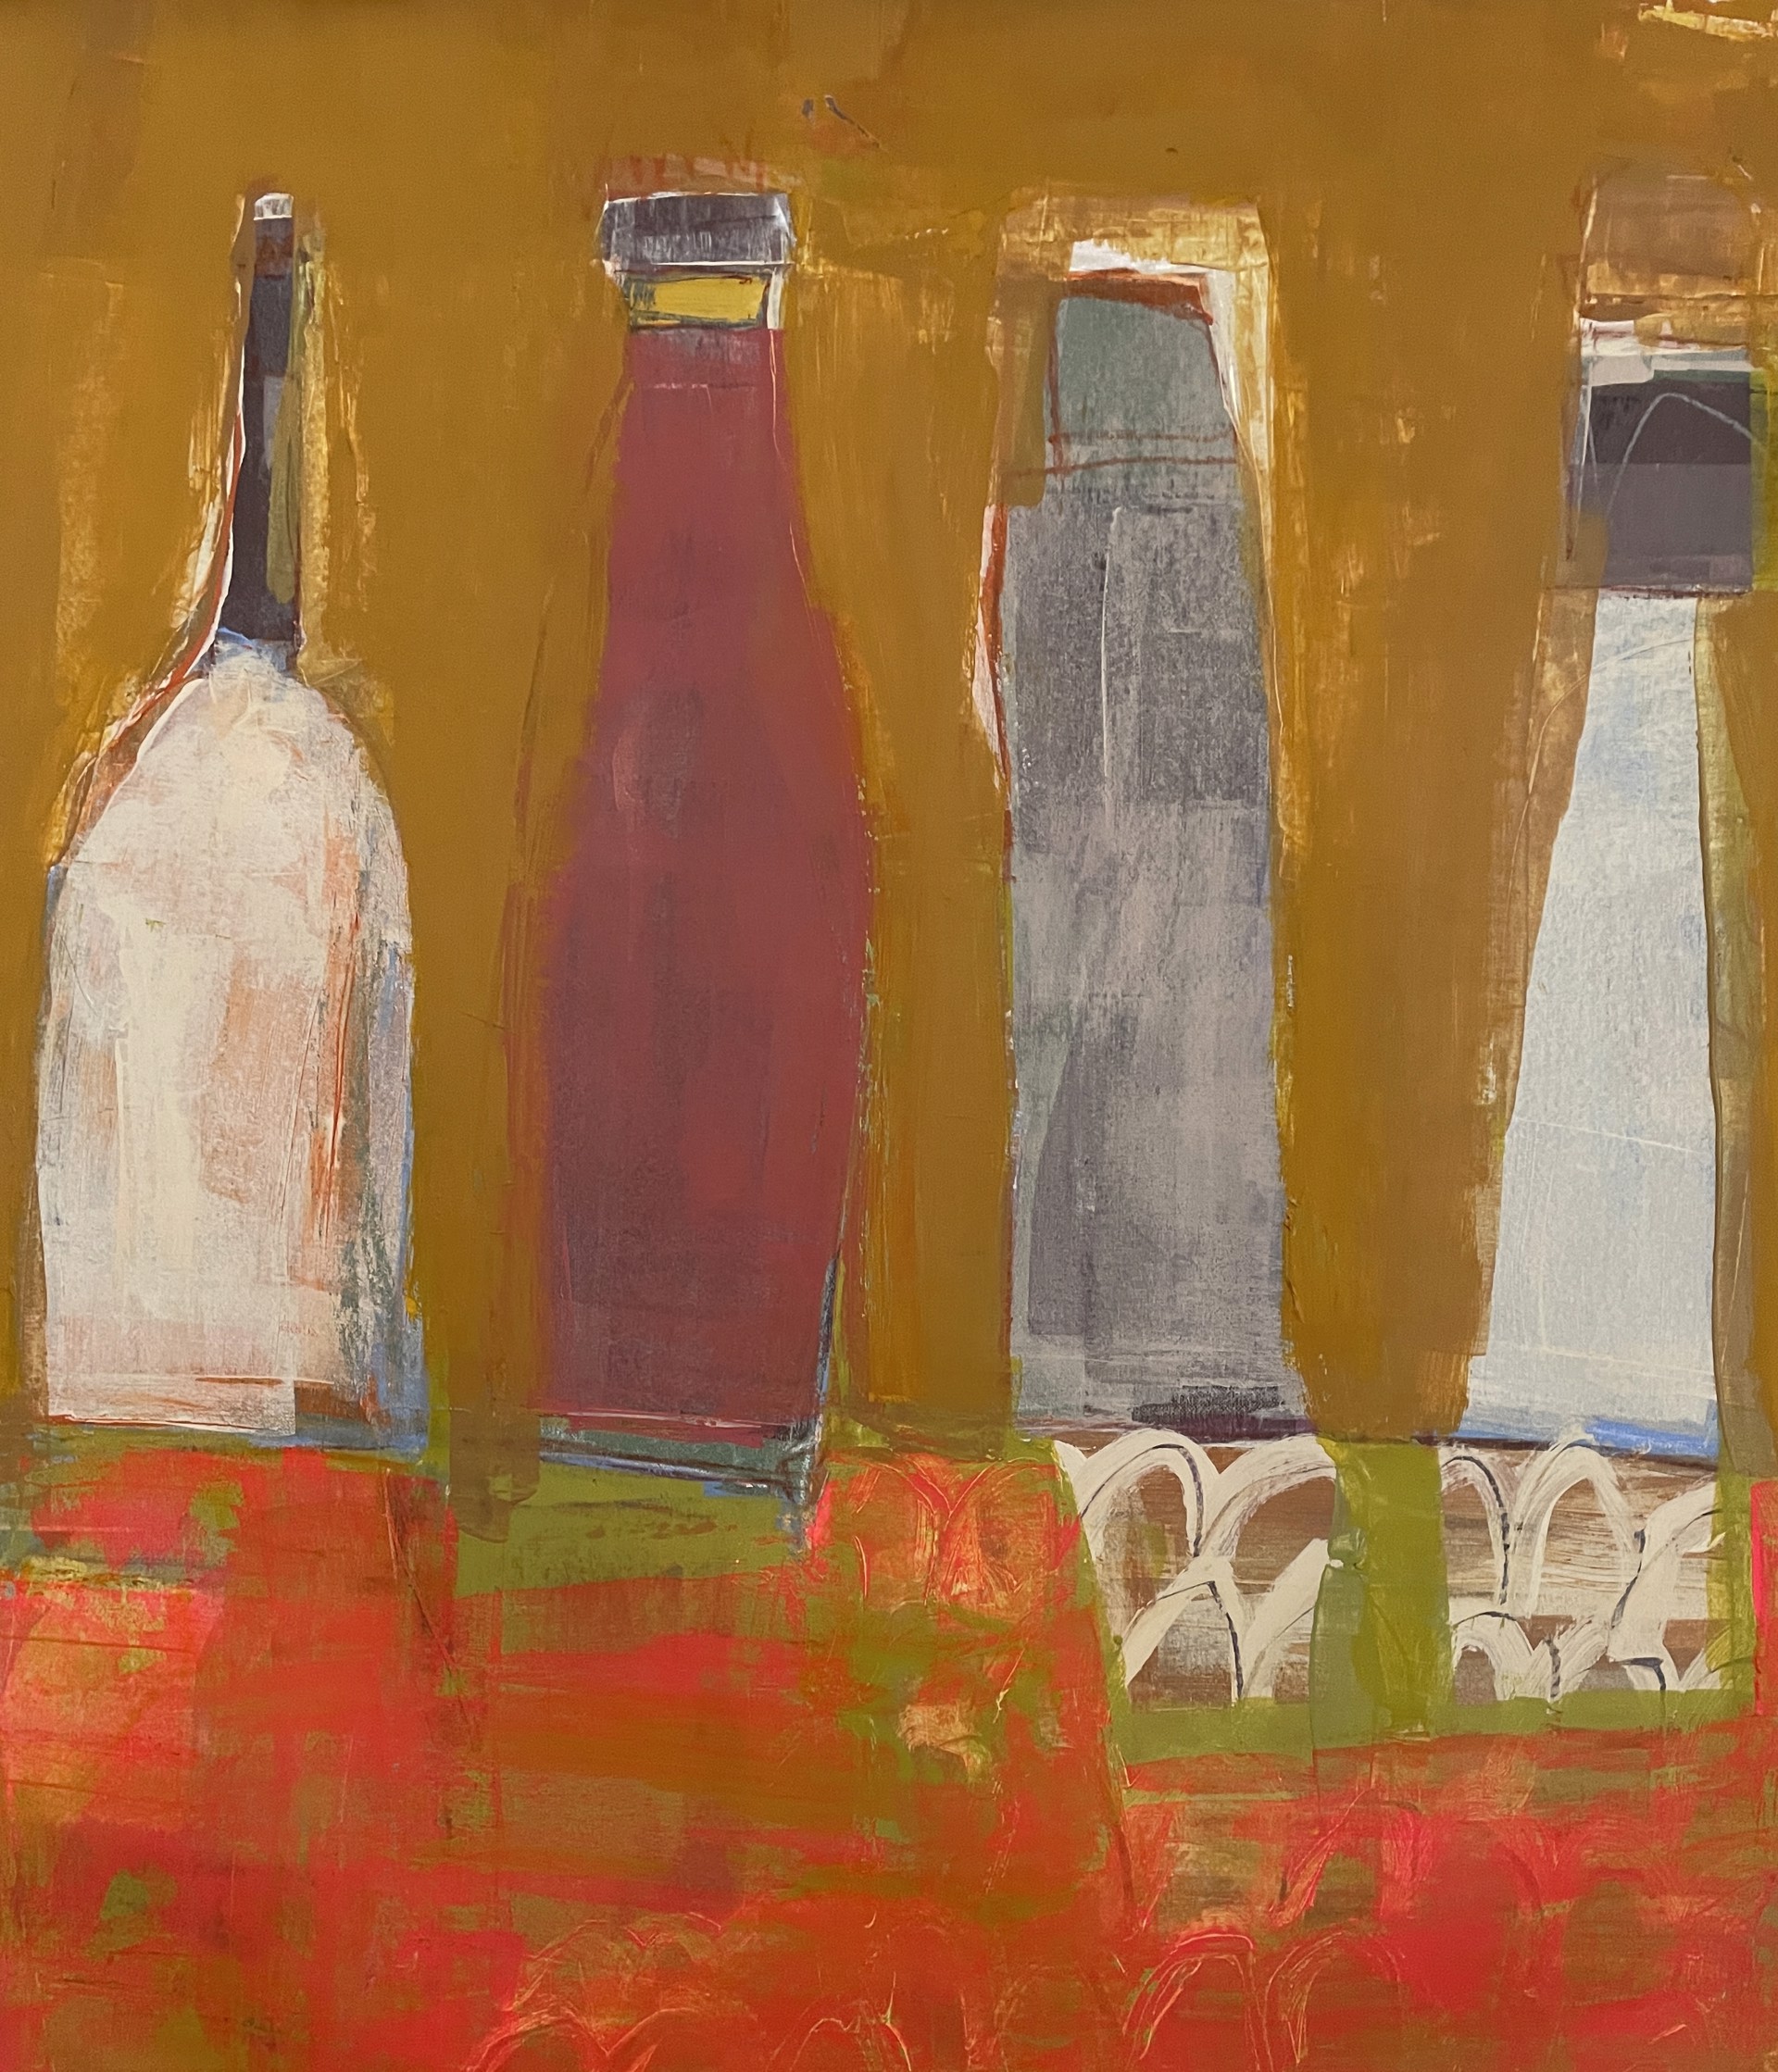 Four Bottles on Table, Padula by Rachael Van Dyke